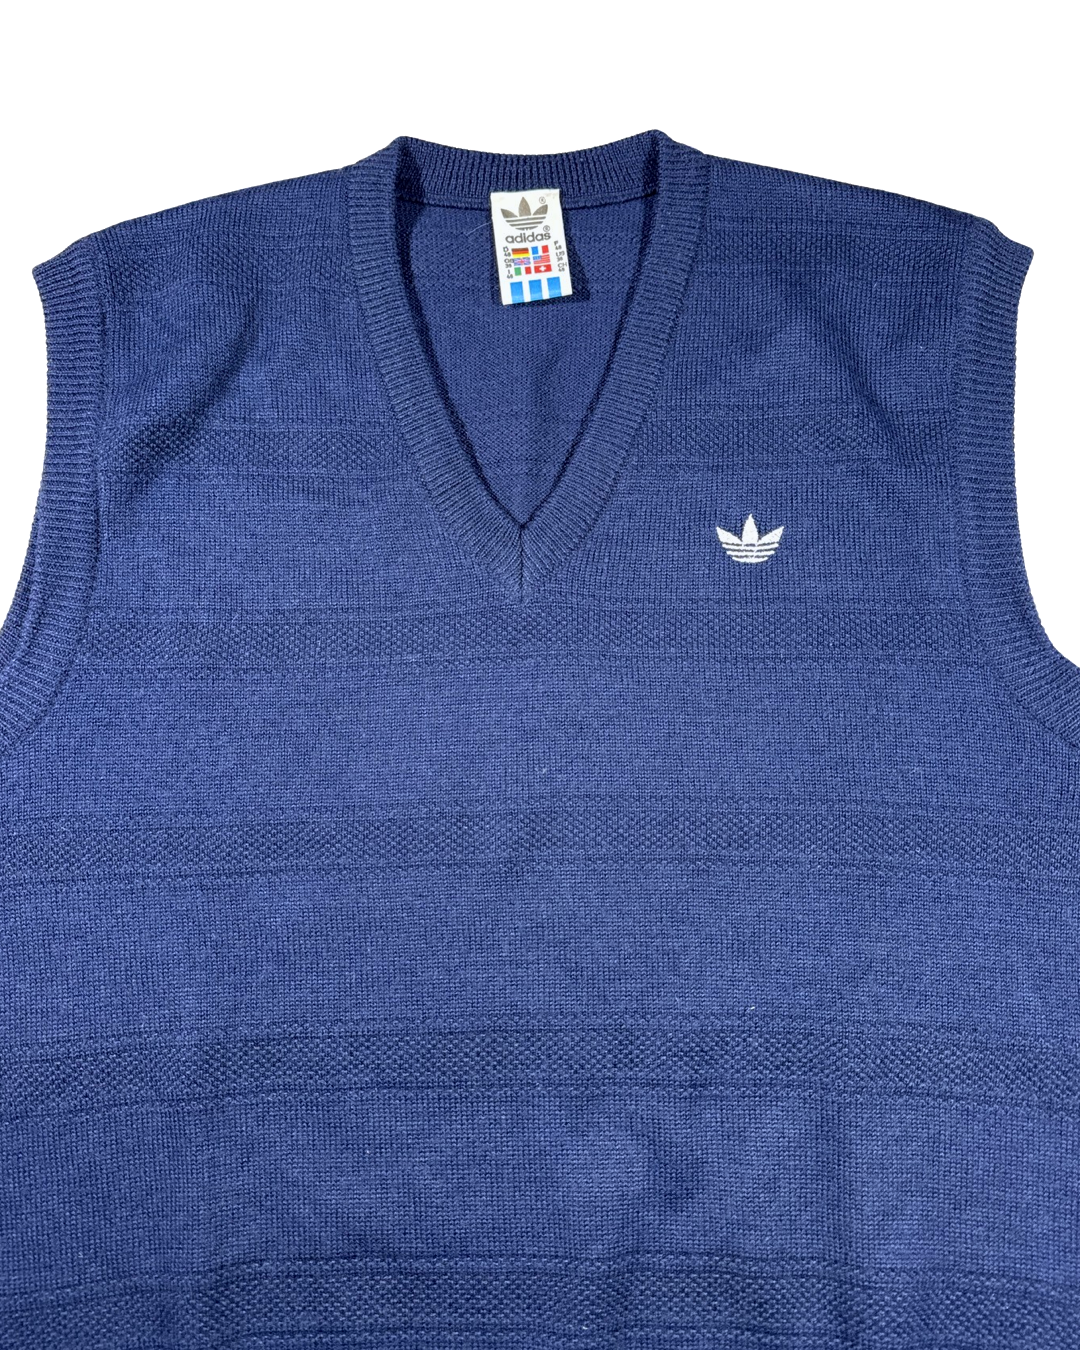 Vintage Adidas Knit Vest - M